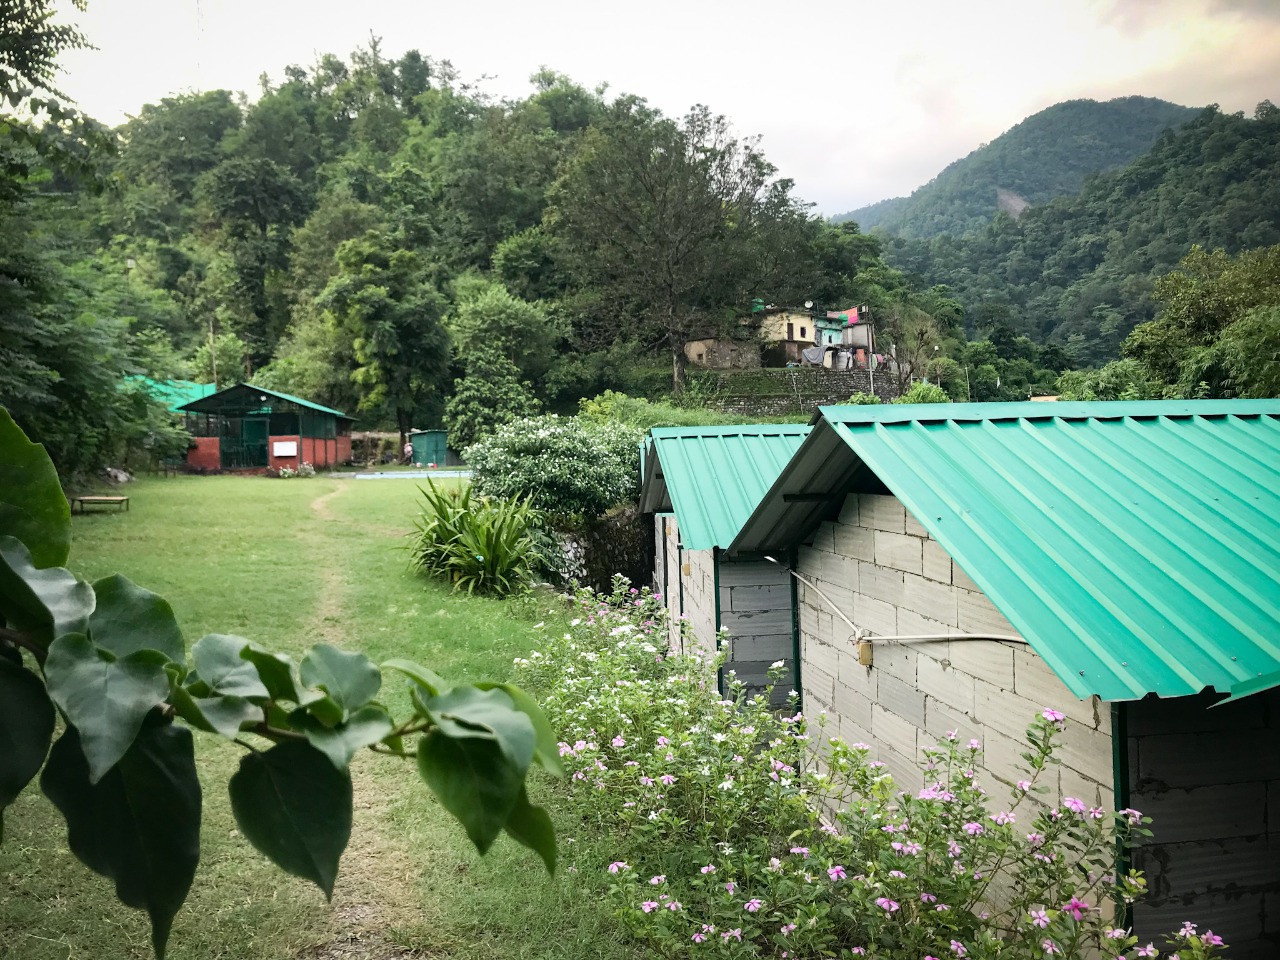 Camp Badal Advenutre, Rishikesh Photo - 2